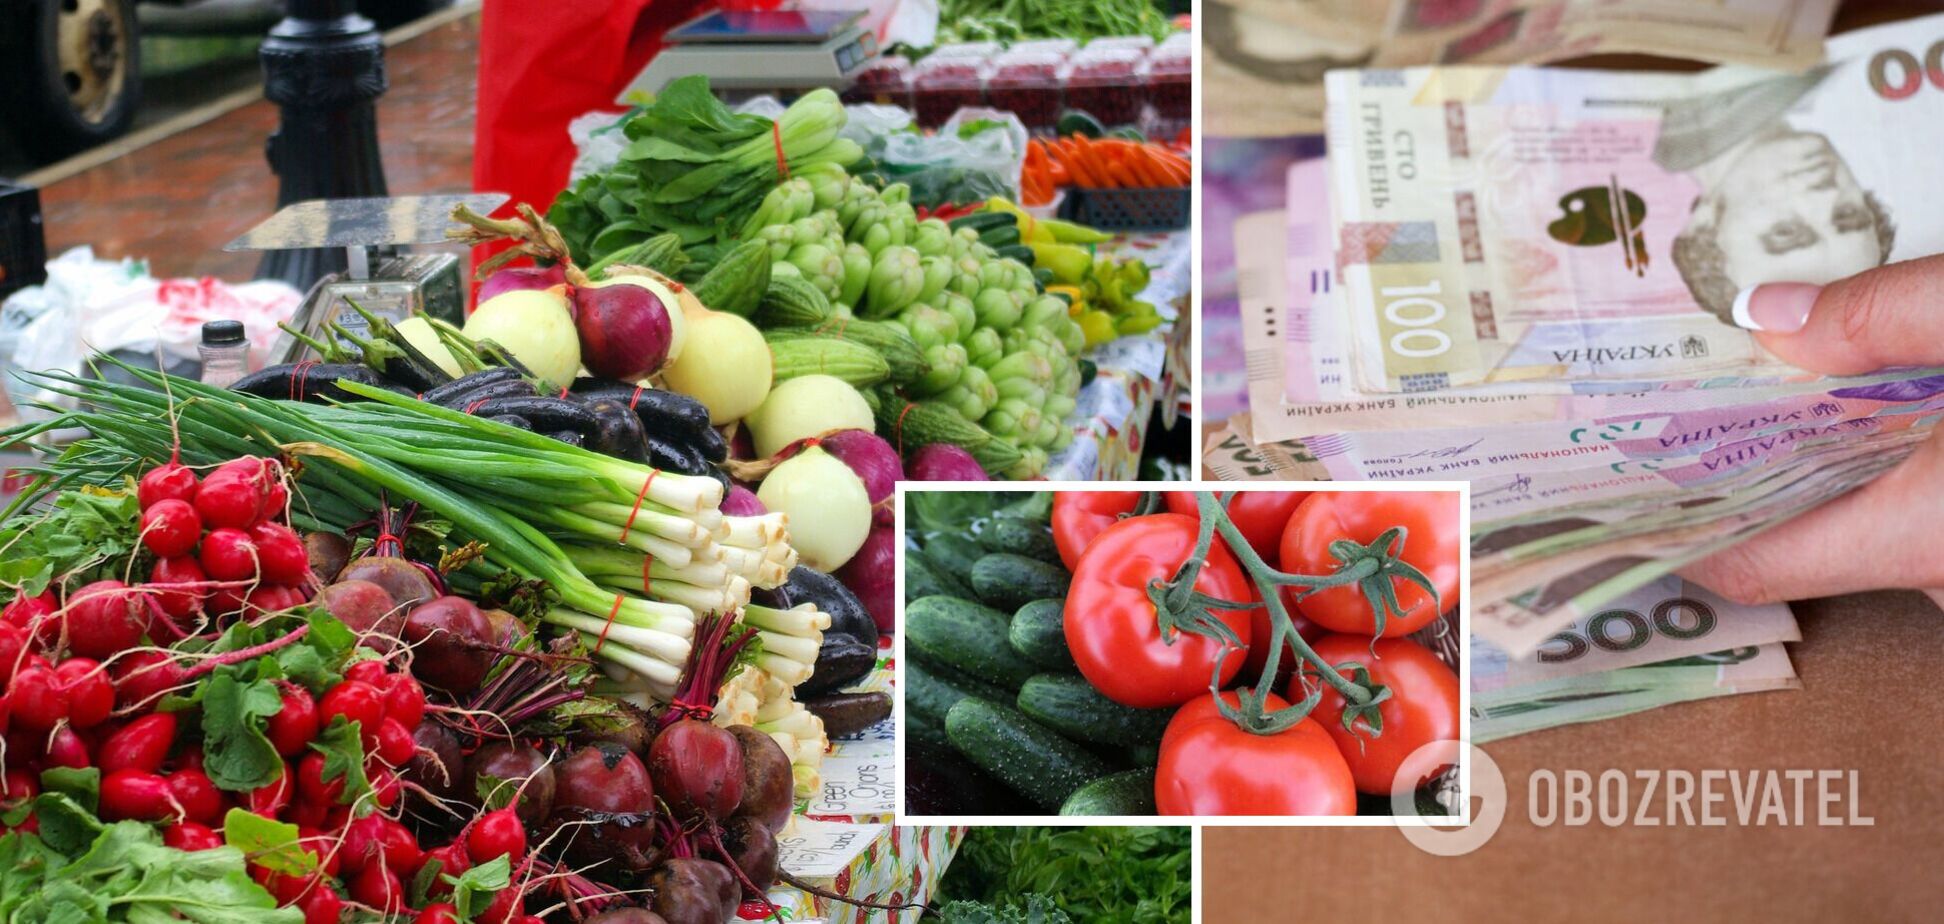 Цены на овощи в Украине снижаются